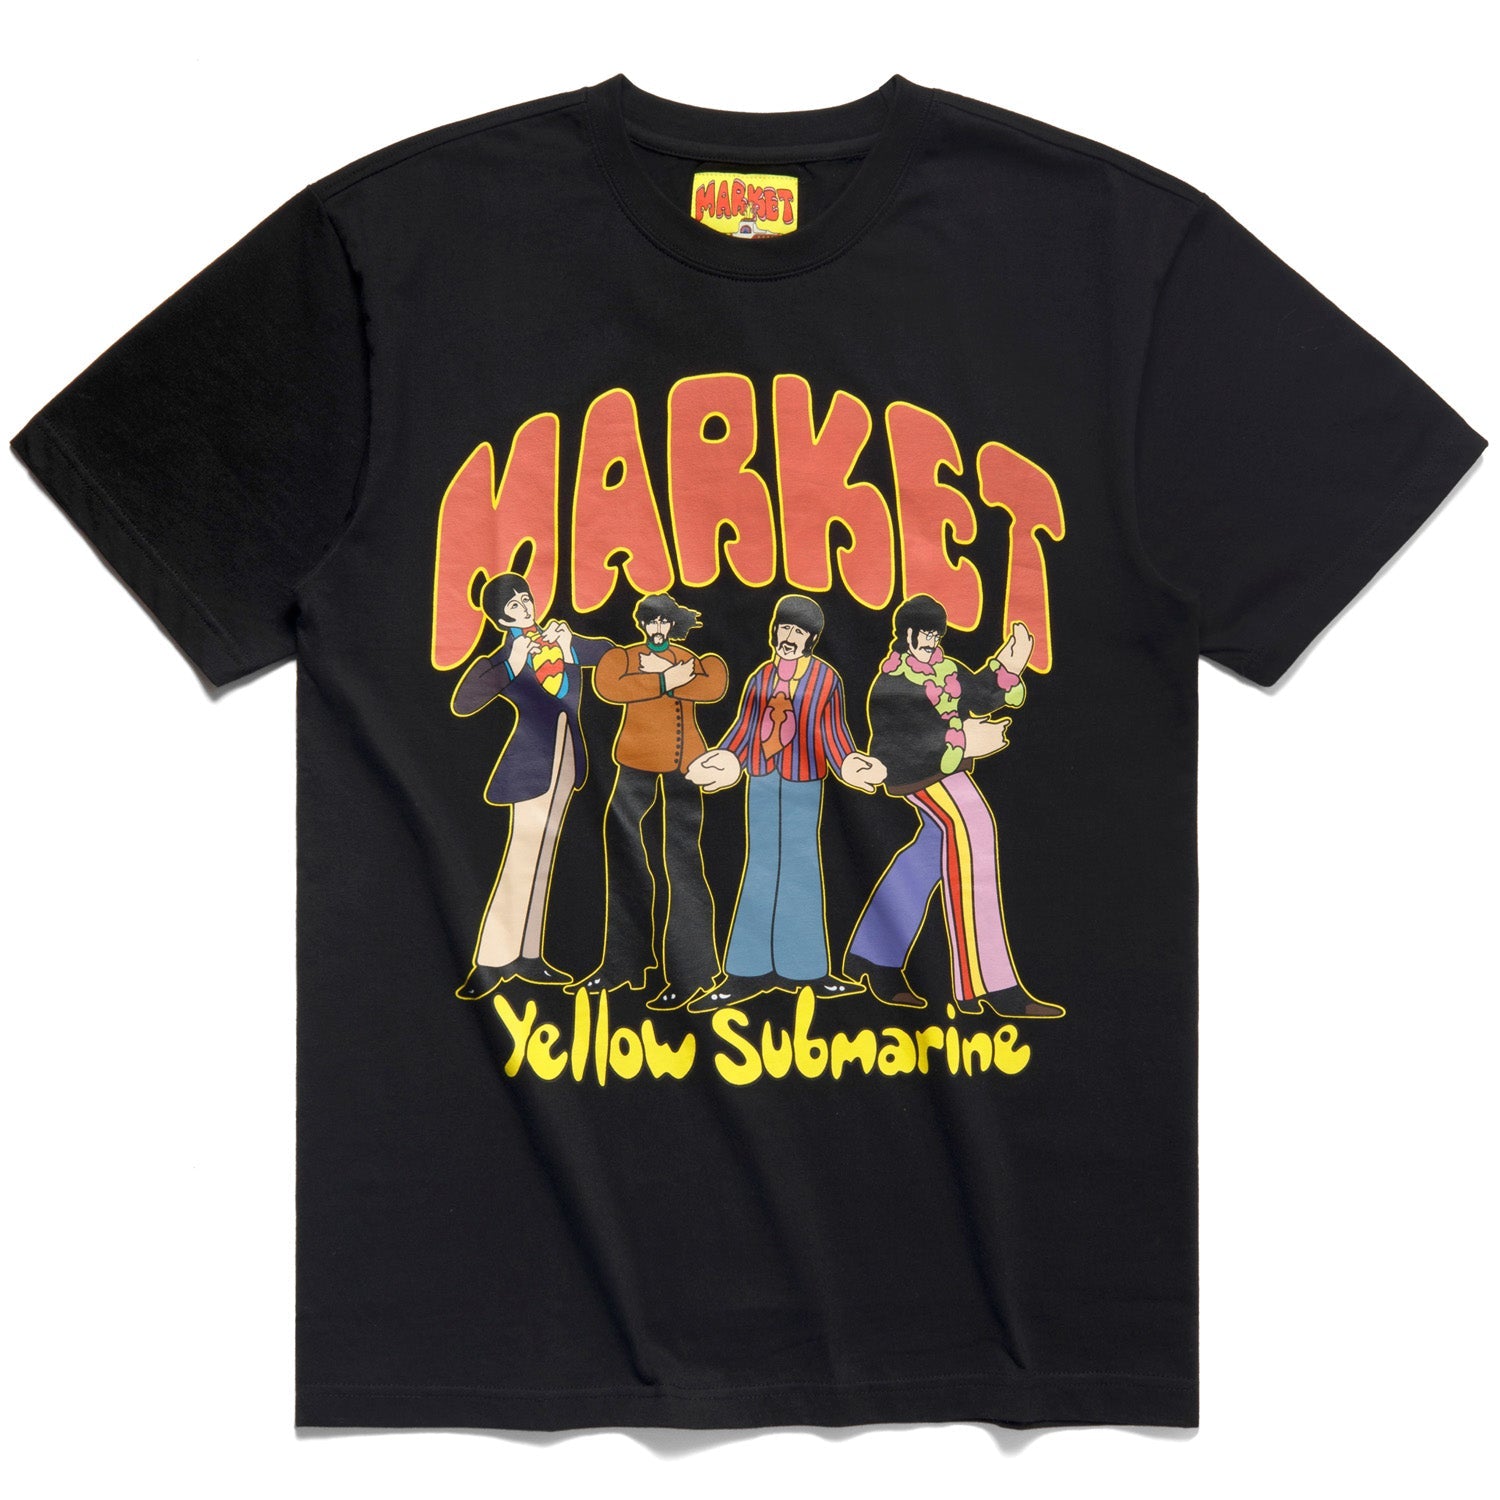 Market Men x Beatles Yellow Submarine Pose T-Shirt Black - T-SHIRTS - Canada